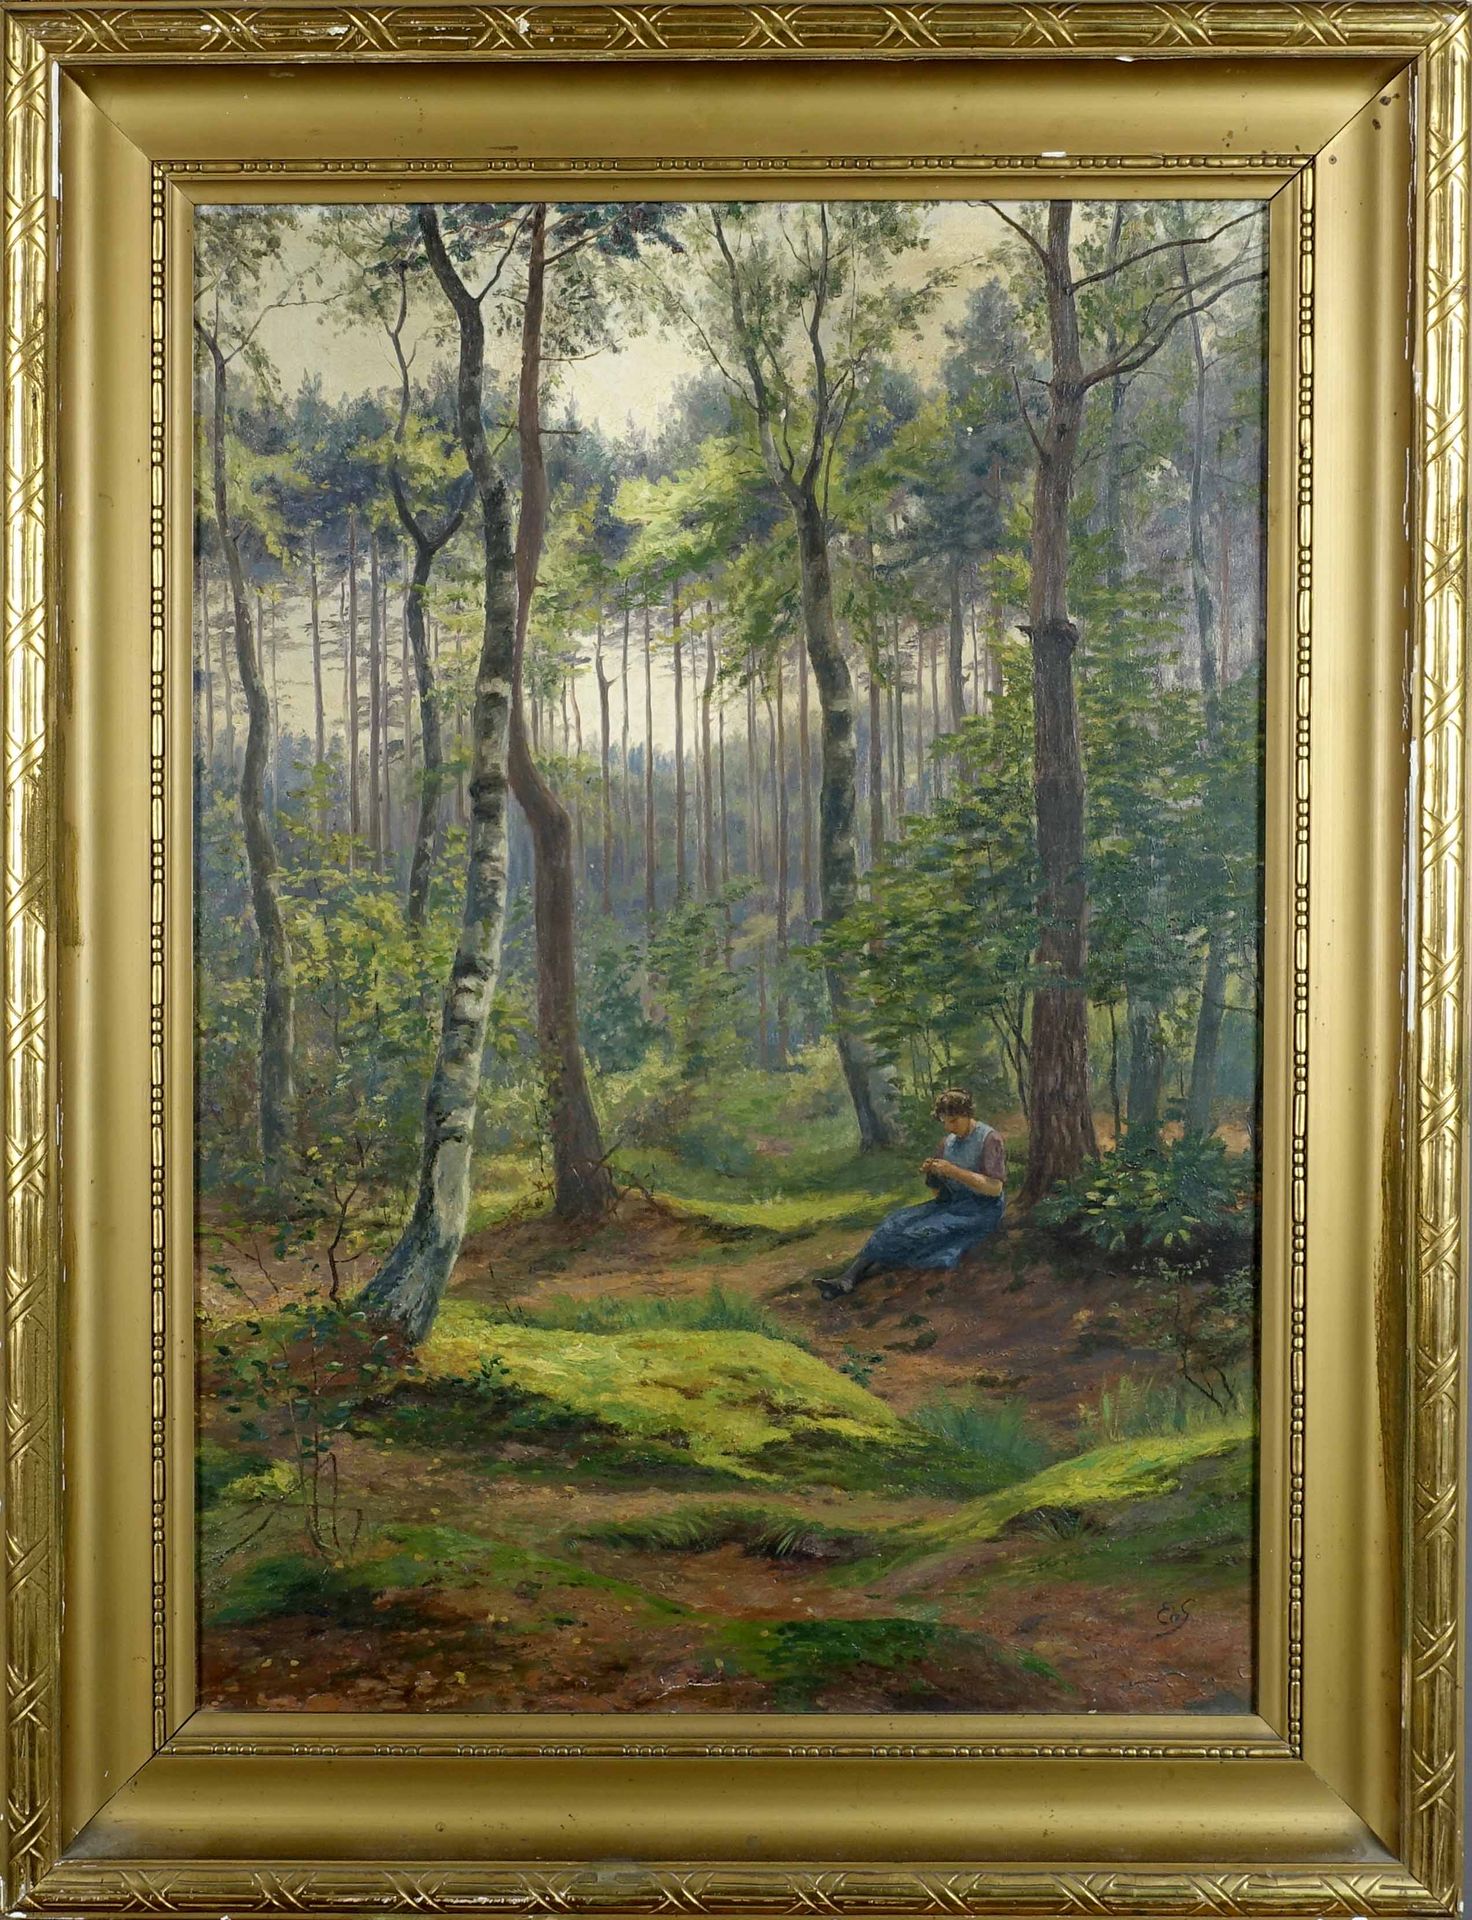 Edmond De Schampheleer (1824-1899). 灌木丛中的农家女。布面油画，右下角有文字说明。尺寸：70 x 50厘米。